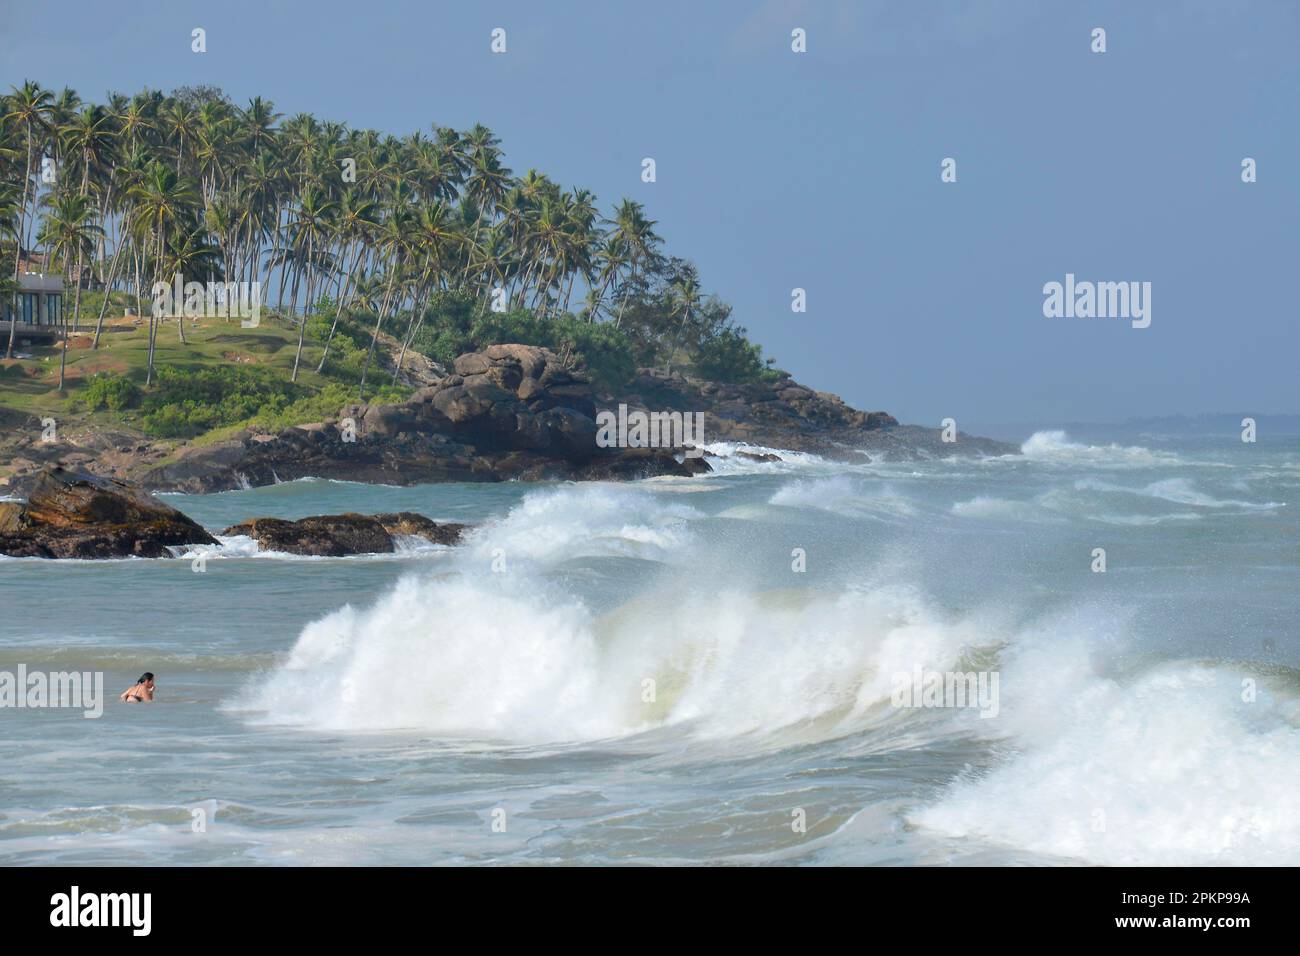 Wave, Goyambokka Beach, Tangalle, Sri Lanka, Asia Stock Photo